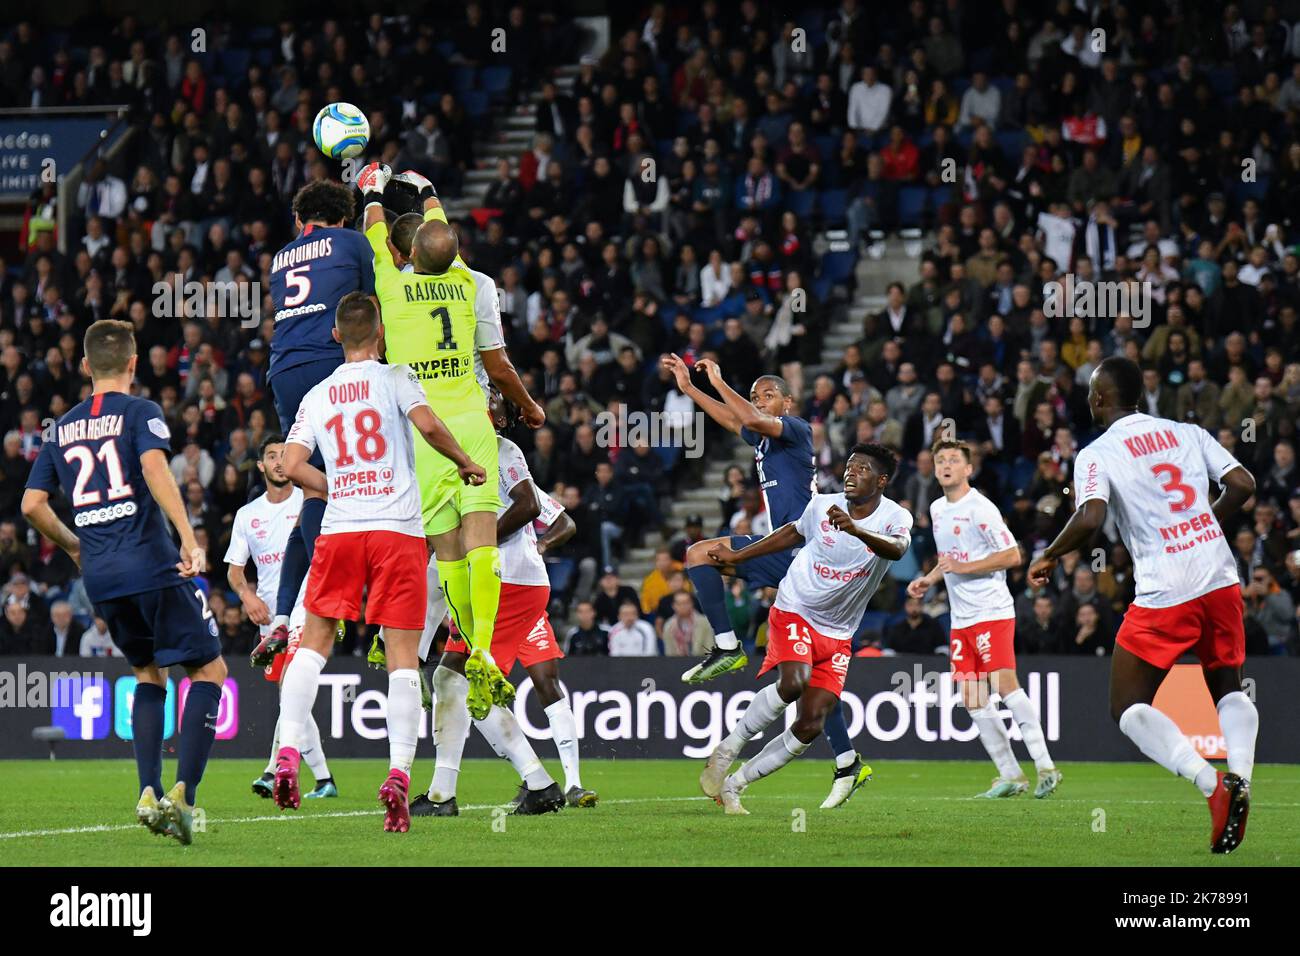 7th day of Ligue 1 Conforama. Rajkovic Predrag during the match between Paris Saint Germain (PSG) and the Stade de Reims, Parc des Princes, September 25, 2019. Stock Photo